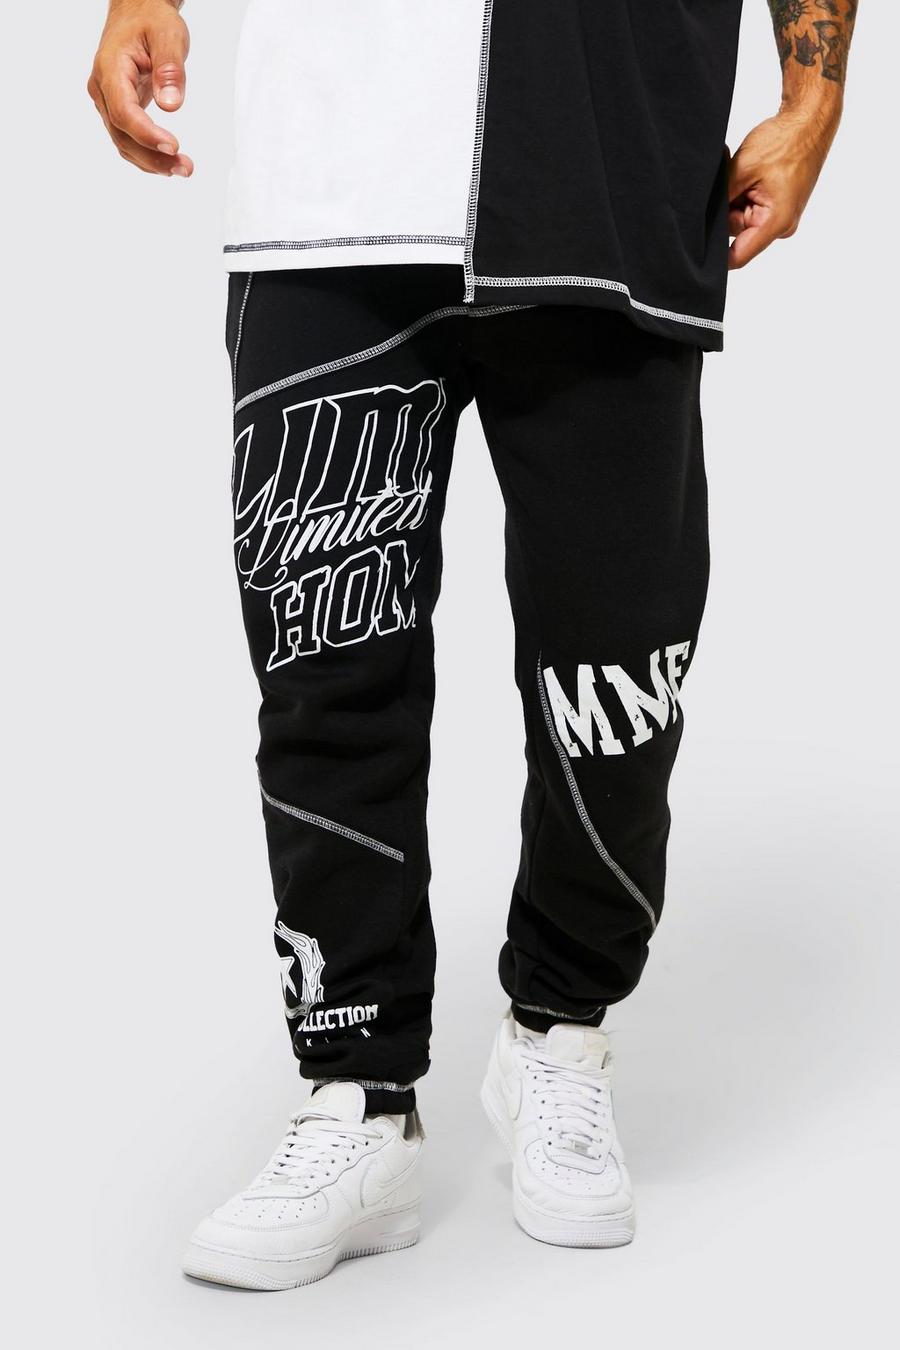 Pantaloni tuta Regular Fit effetto patchwork con grafica stile college, Black negro image number 1